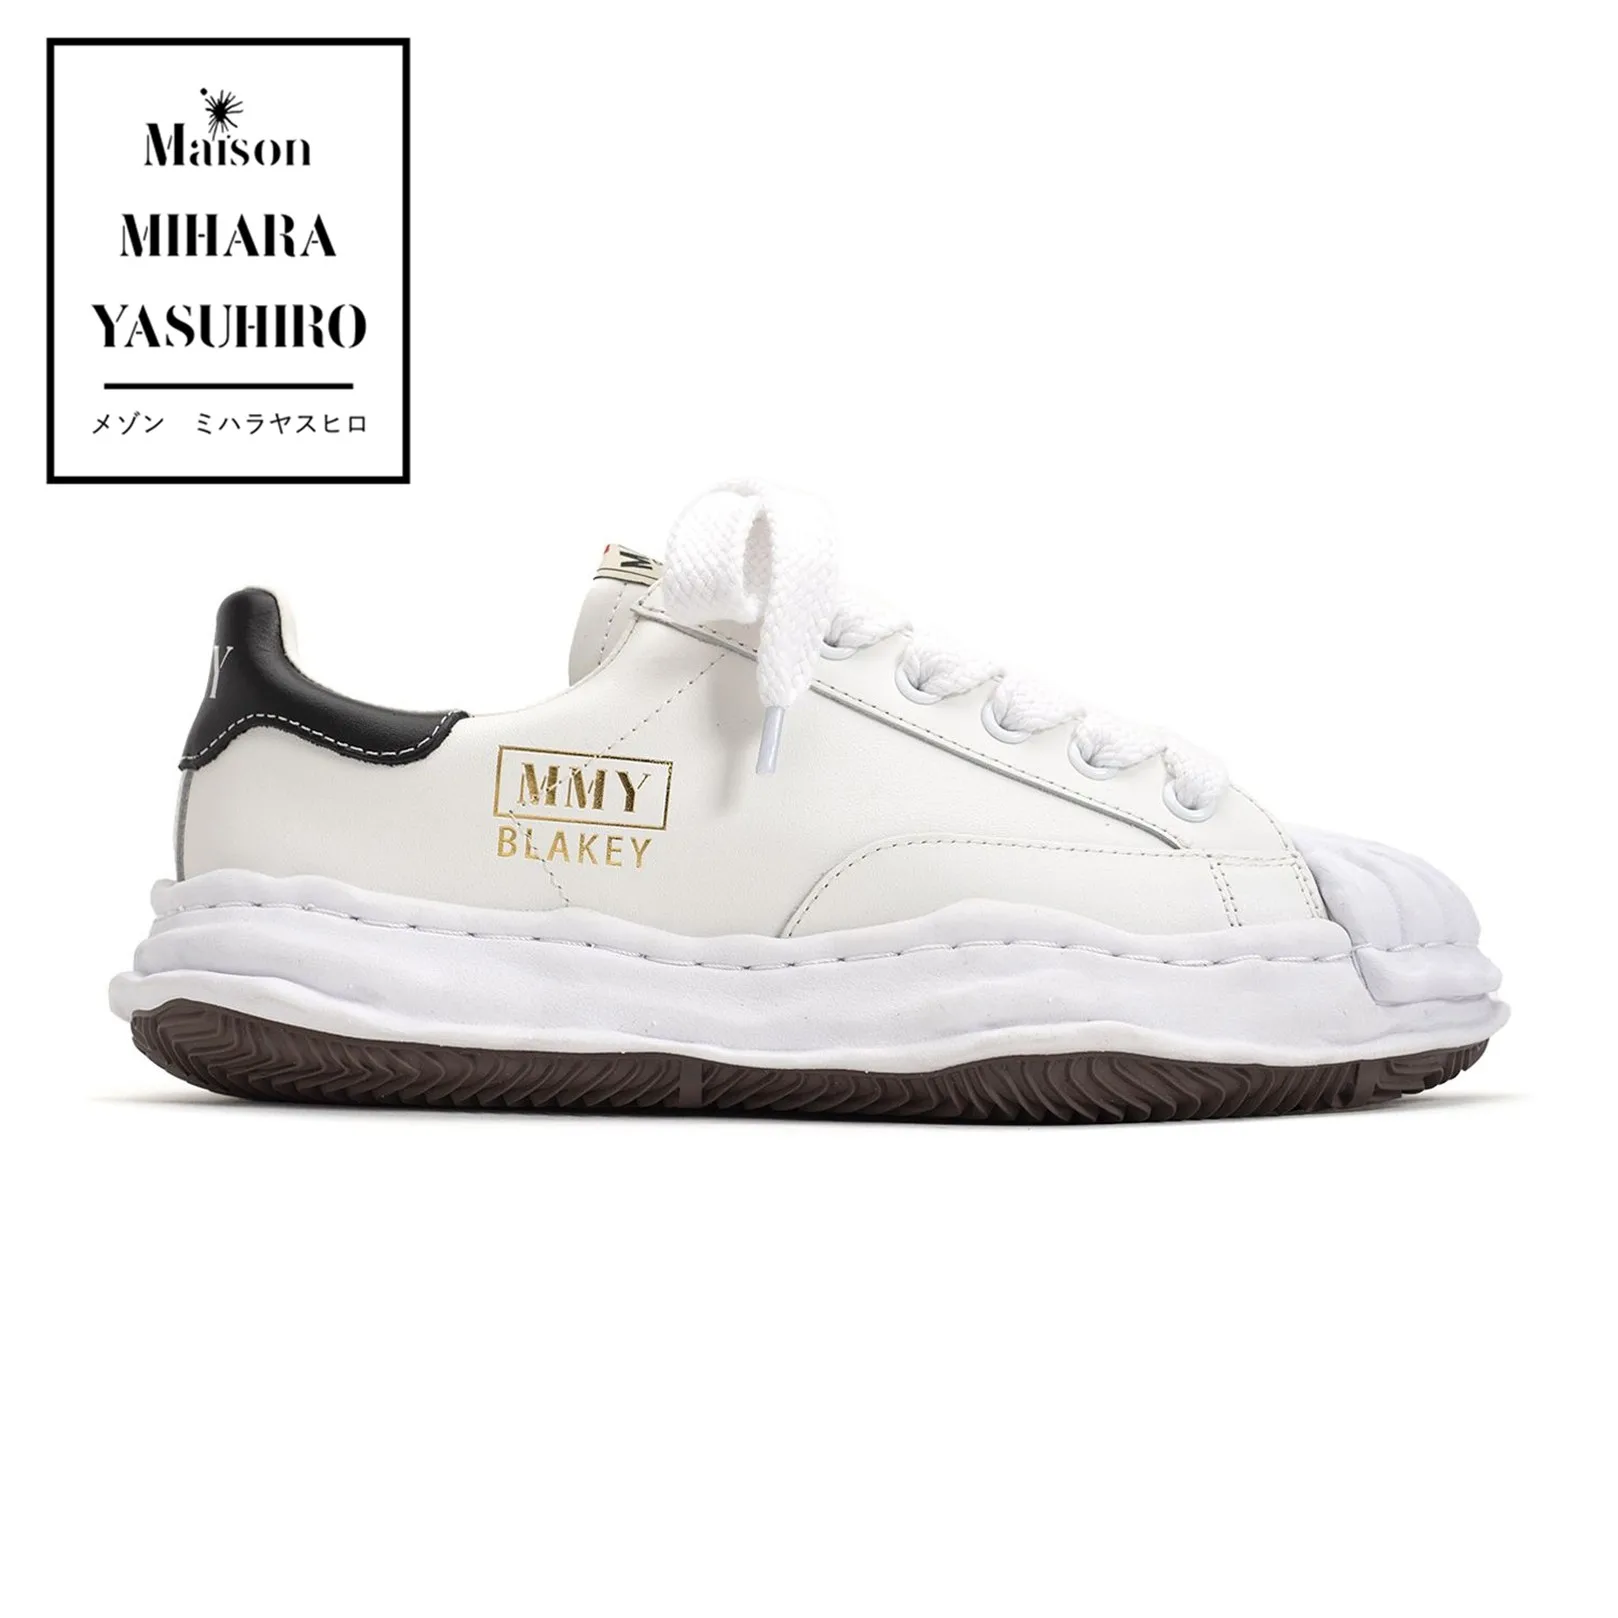 

MMY Maison MIHARA YASUHIRO Wayne BLAKEY VL OG Sole Leather Low-top Sneaker White Men's Casual shoes Women's Driving shoes